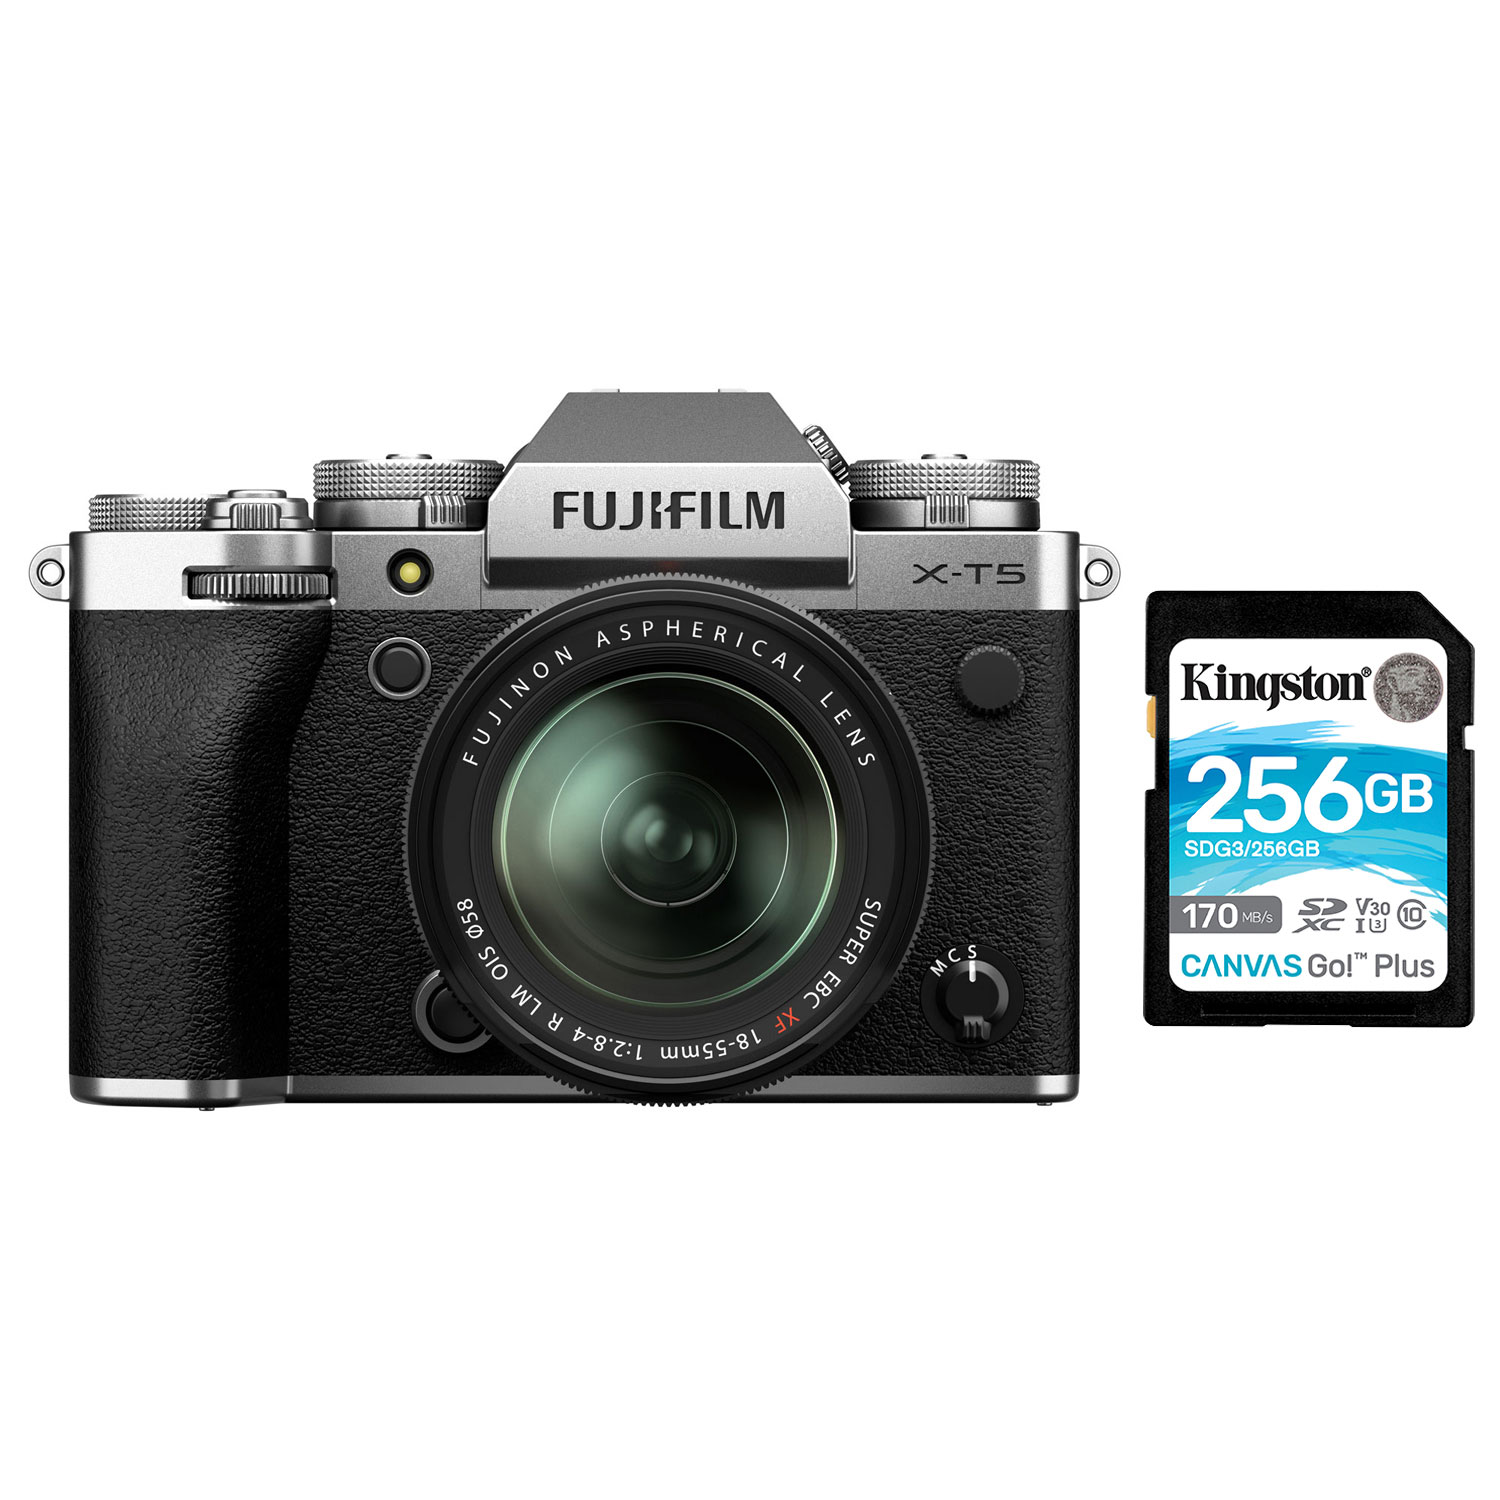 Fujifilm X-T5 Mirrorless Camera w/ XF 18-55mm f/2.8-4 R LM OIS Lens Kit & 256GB SDXC Memory Card -Silver